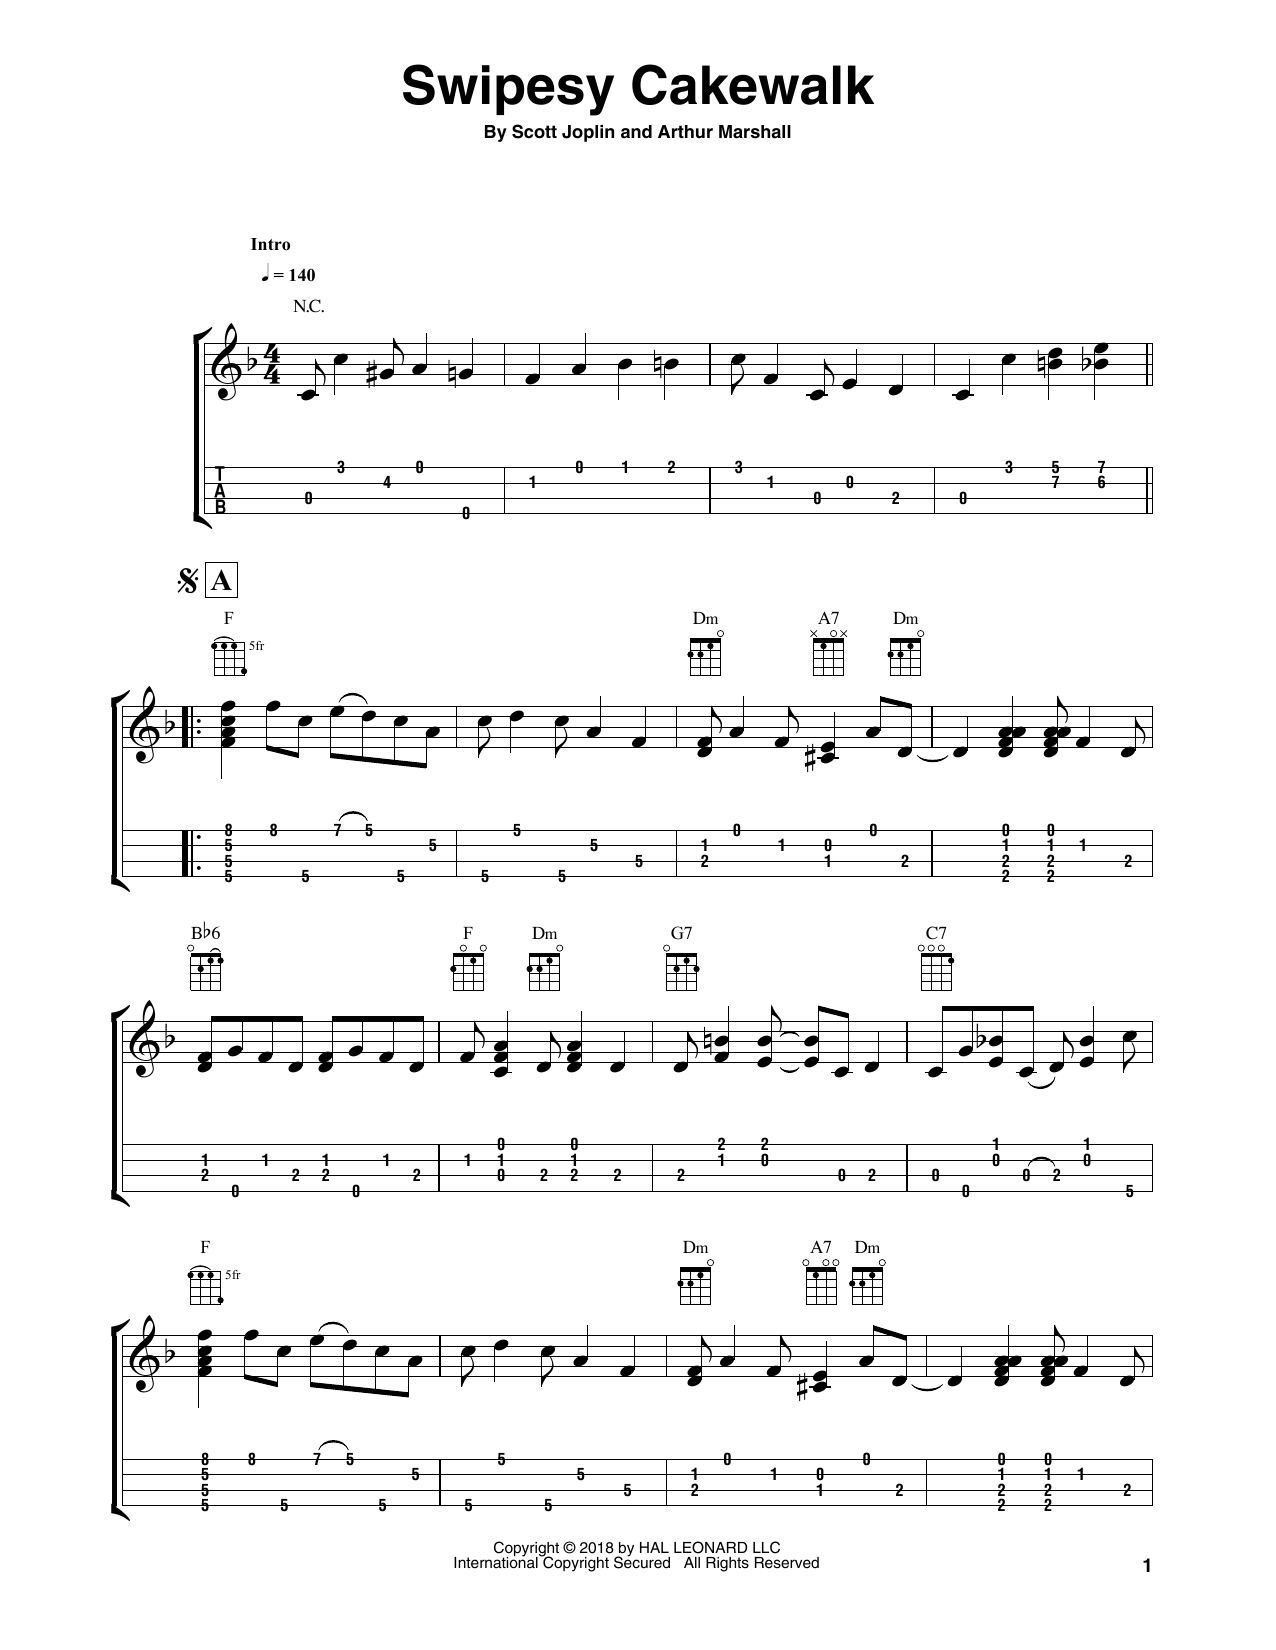 Fred Sokolow Swipesy Cakewalk Sheet Music Notes & Chords for Ukulele - Download or Print PDF